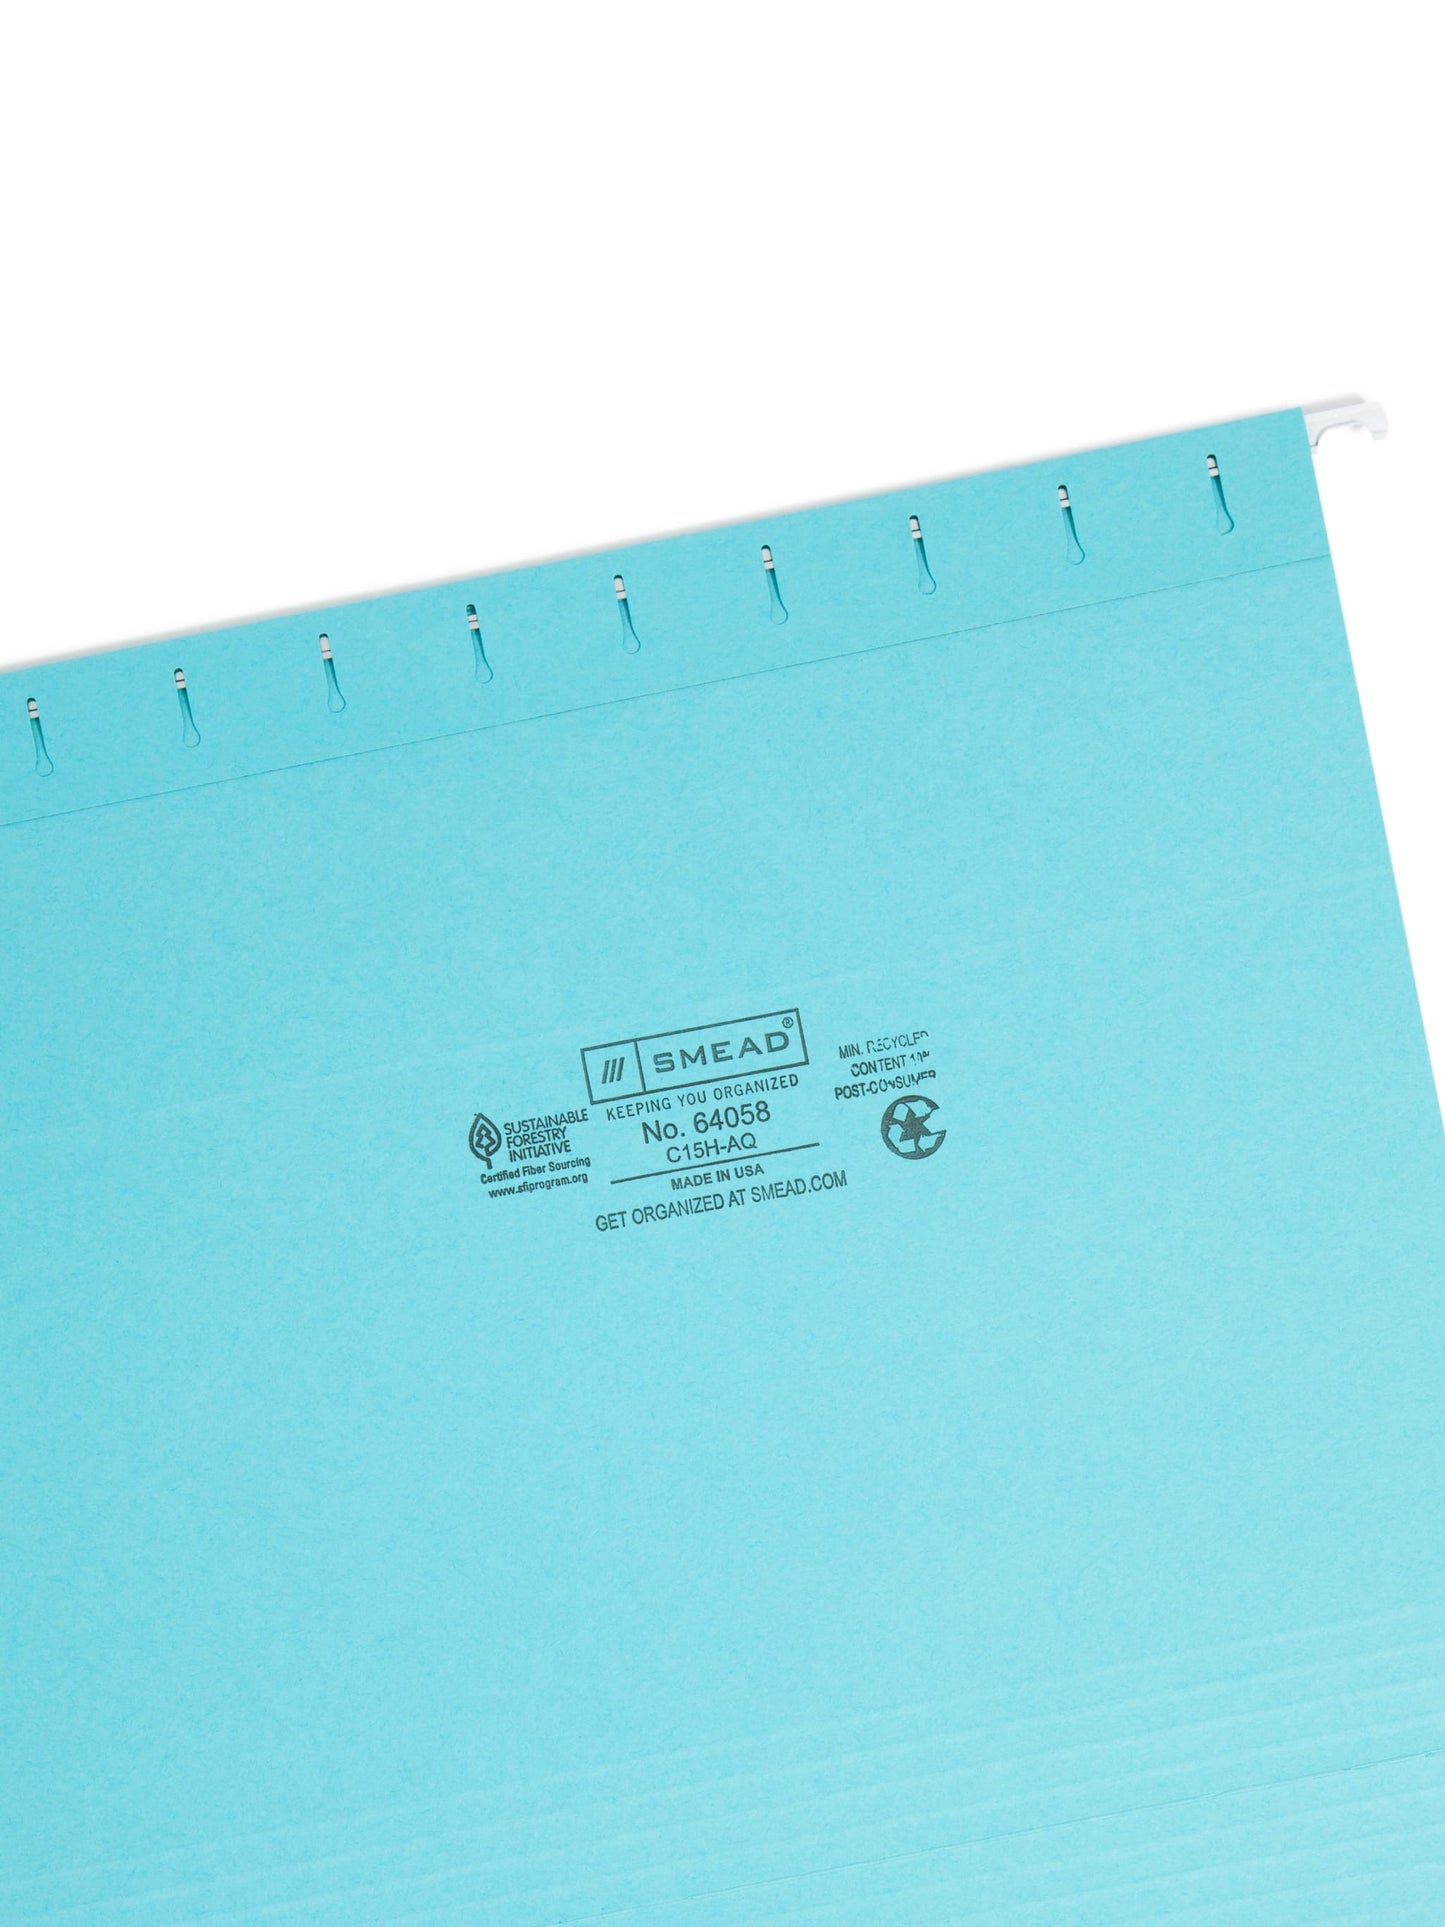 Standard Hanging File Folders with 1/5-Cut Tabs, Aqua Color, Letter Size, Set of 25, 086486640589